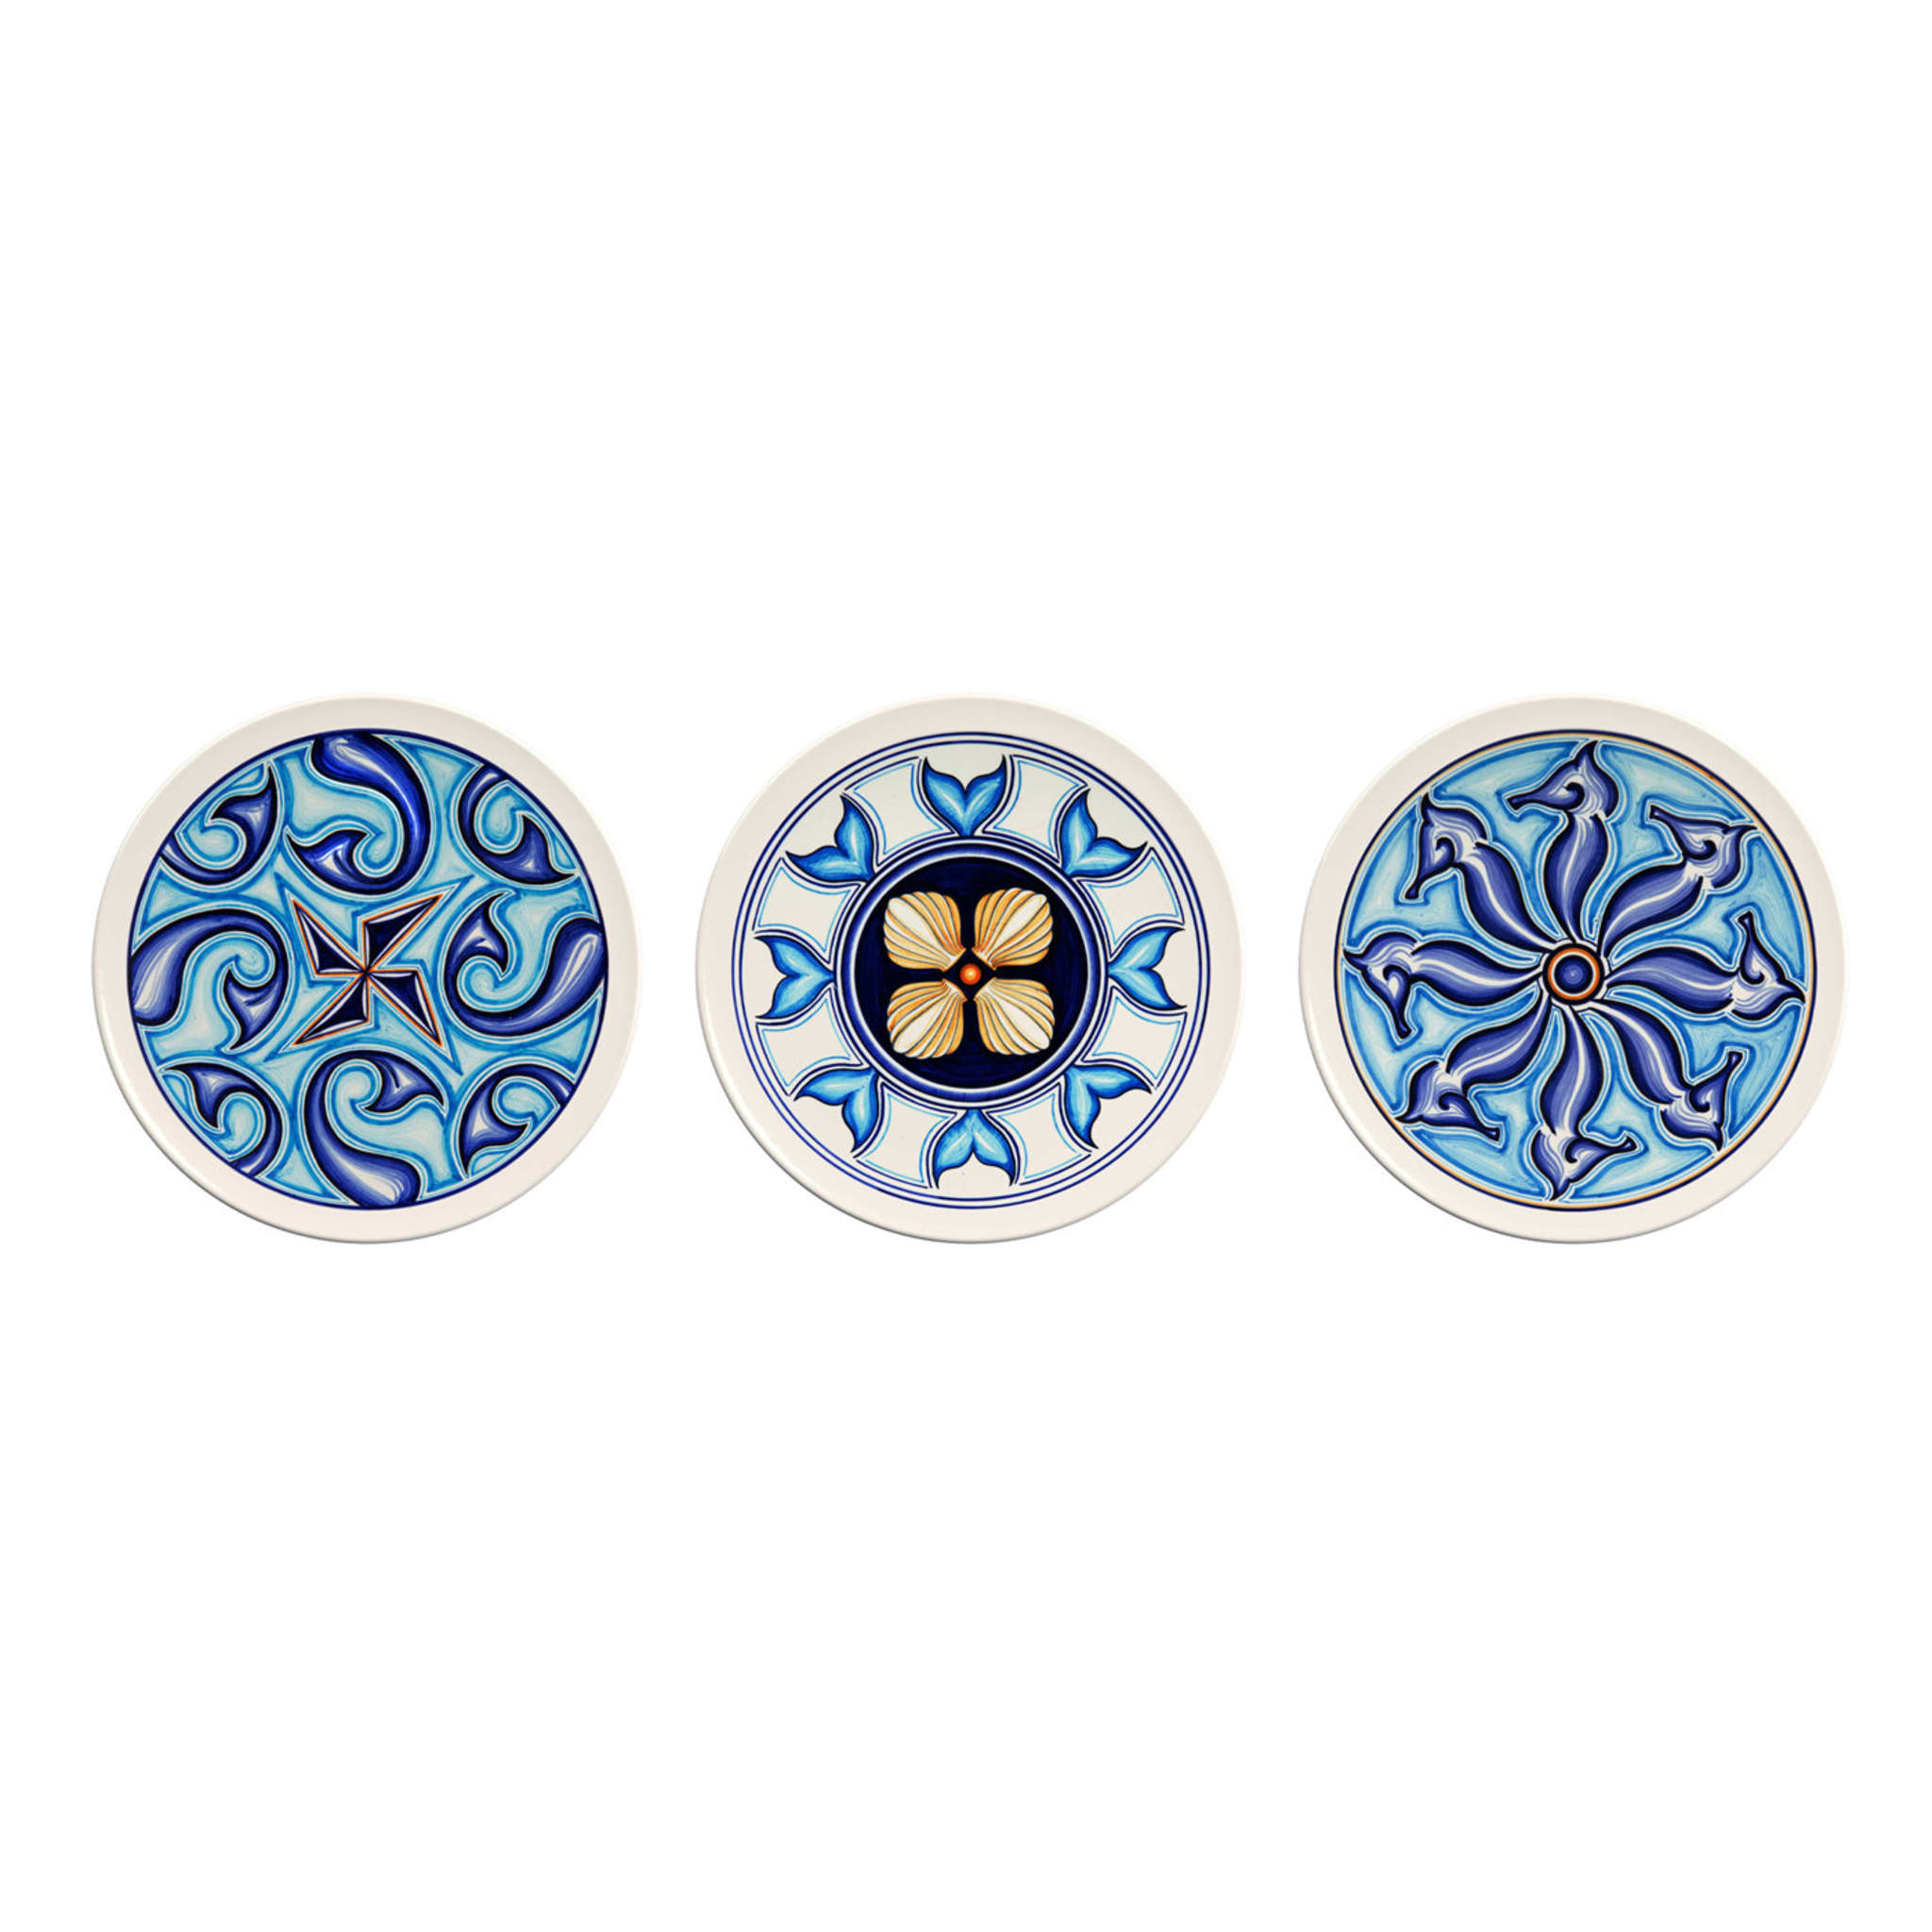 Colapesce Set of 3 Decorative Plates #2 - Main view